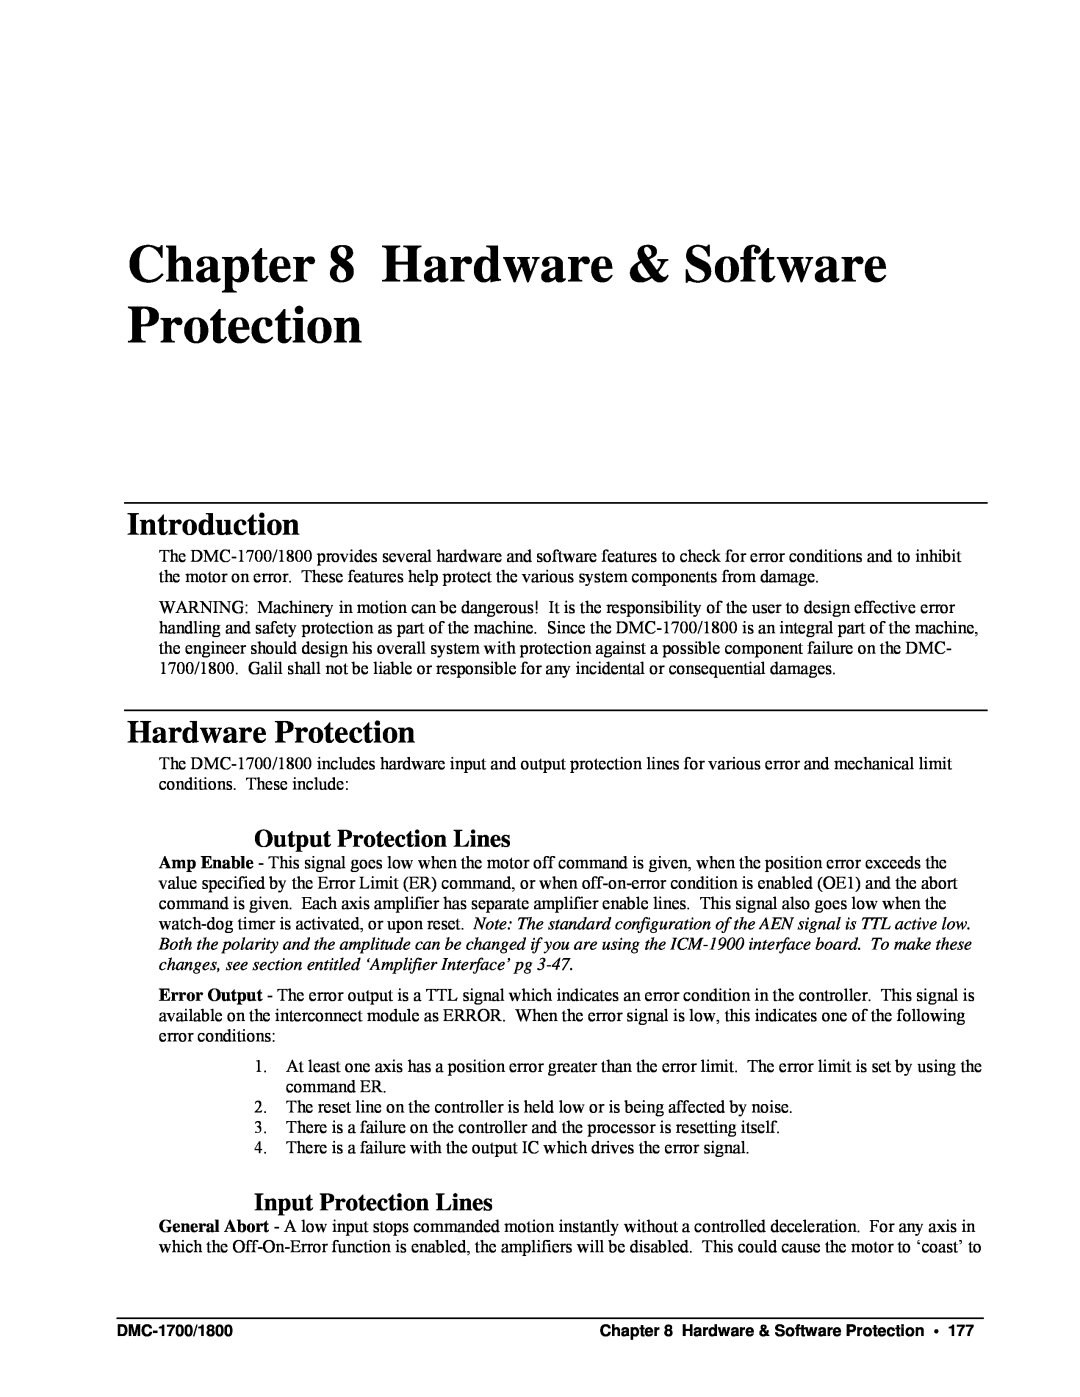 Galil DMC-1700, DMC-1800 Hardware & Software Protection, Introduction, Hardware Protection, Output Protection Lines 